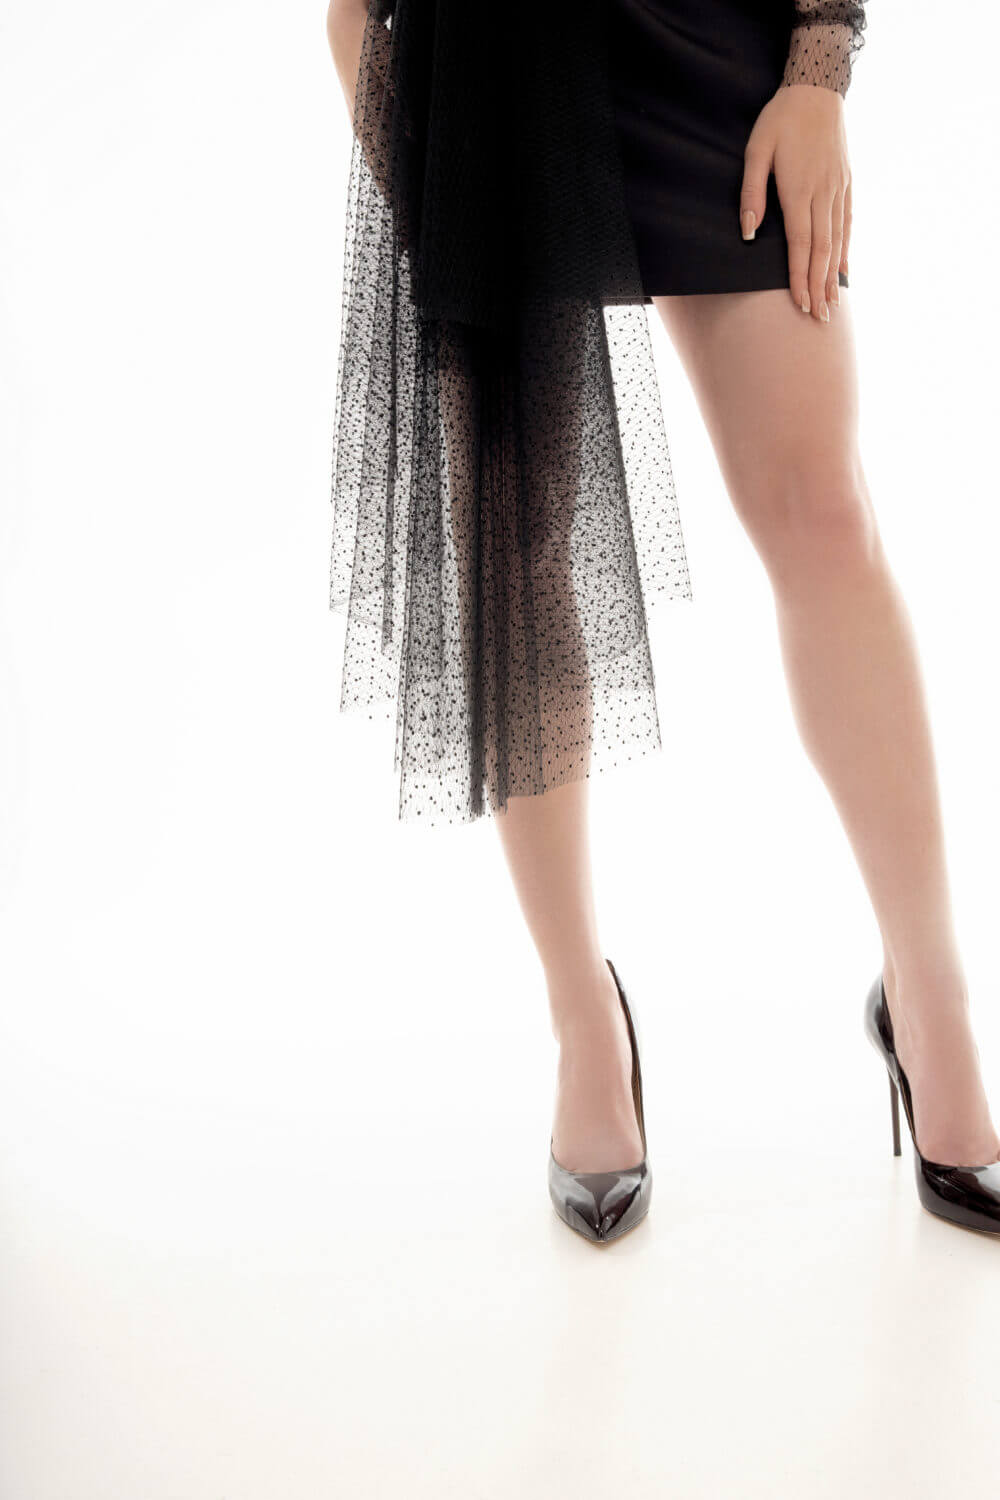 Couture Black Single Sleeve Dress